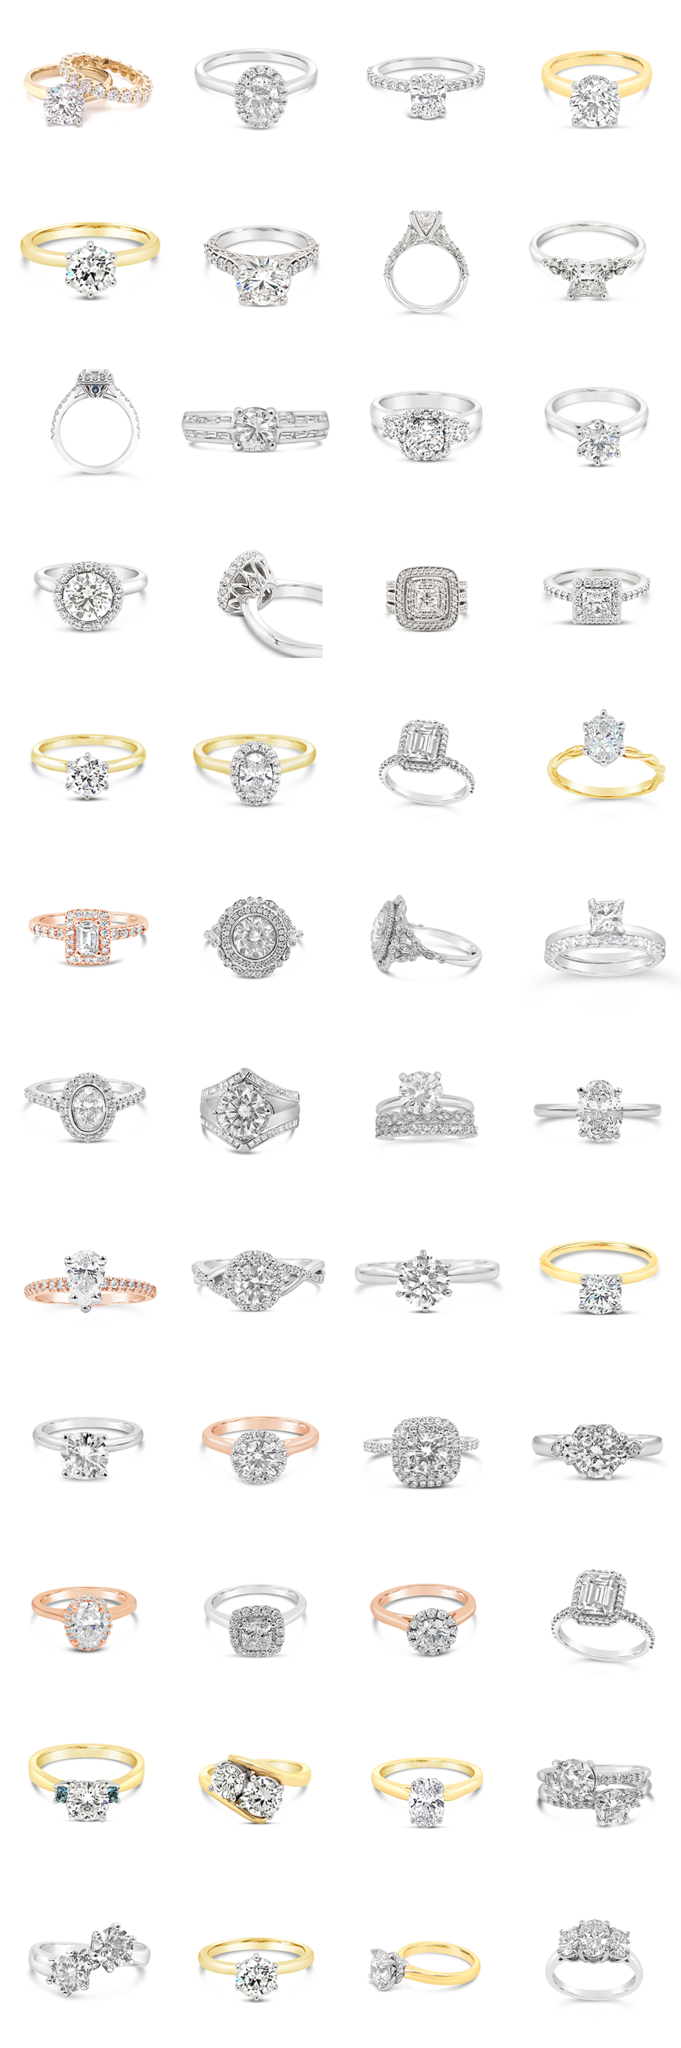 Custom Designed Engagement Rings - Magee Jewellers & Designers